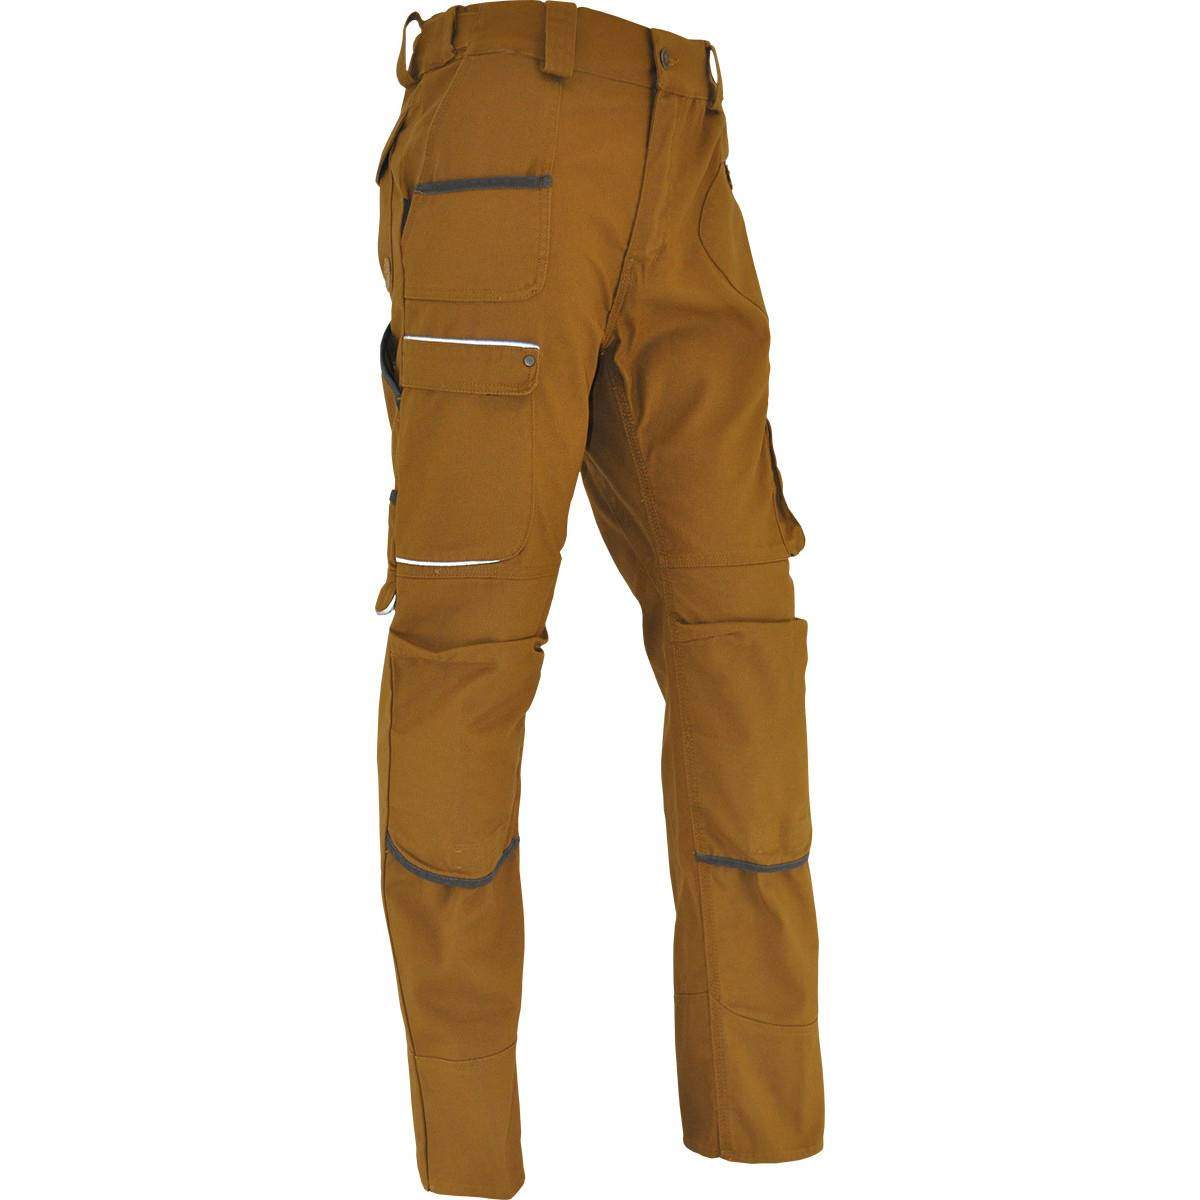 Pantalon chantier SAHARA Taille 38, poches multiples, genouillères incluses, bronze